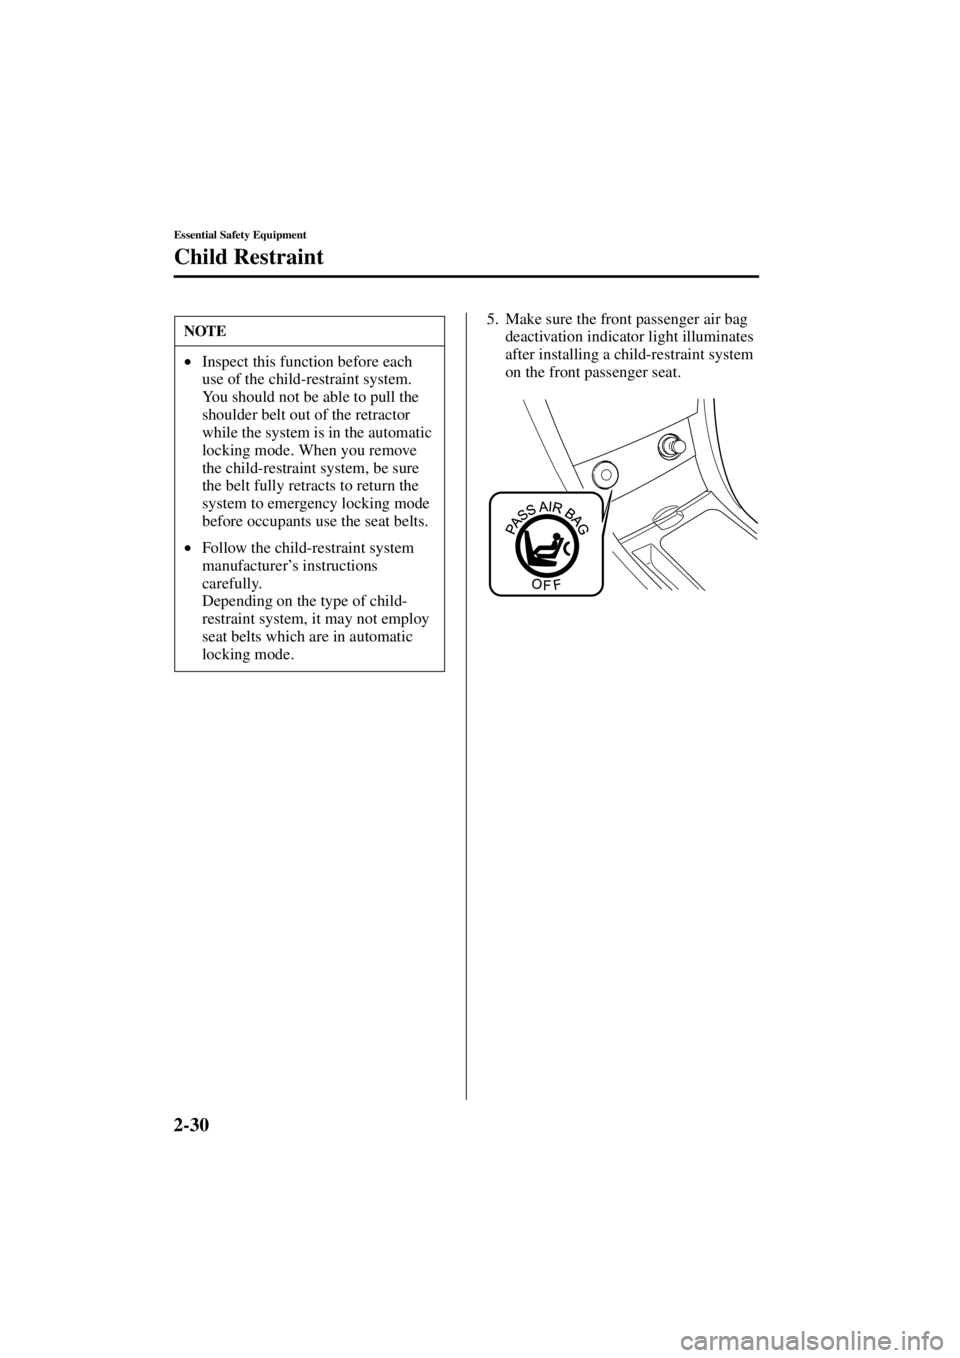 MAZDA MODEL 3 5-DOOR 2004 Service Manual 2-30
Essential Safety Equipment
Child Restraint
Form No. 8S18-EA-03I
5. Make sure the front passenger air bag deactivation indicator light illuminates 
after installing a child-restraint system 
on th